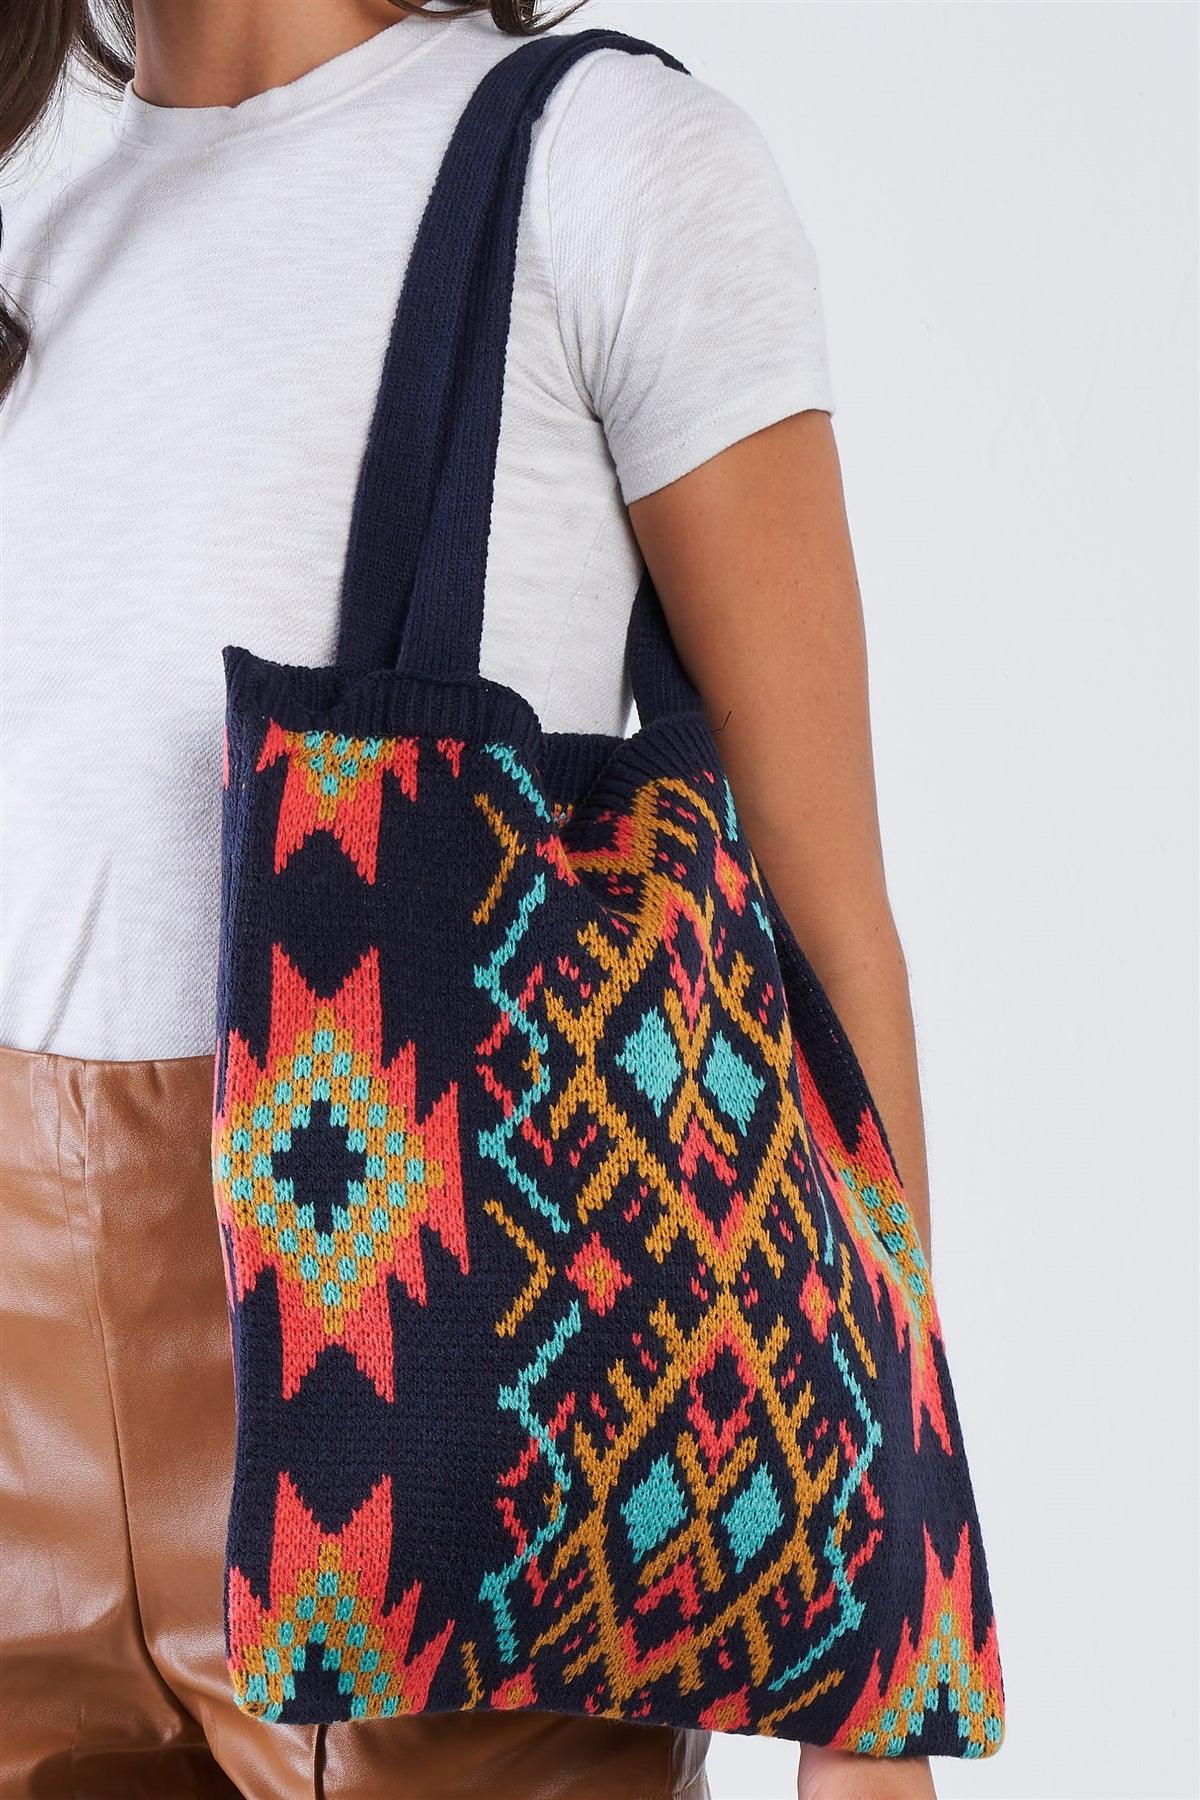 Navy Multi-Colored Tribal Print Knit Boho Tote Bag /1 Bag